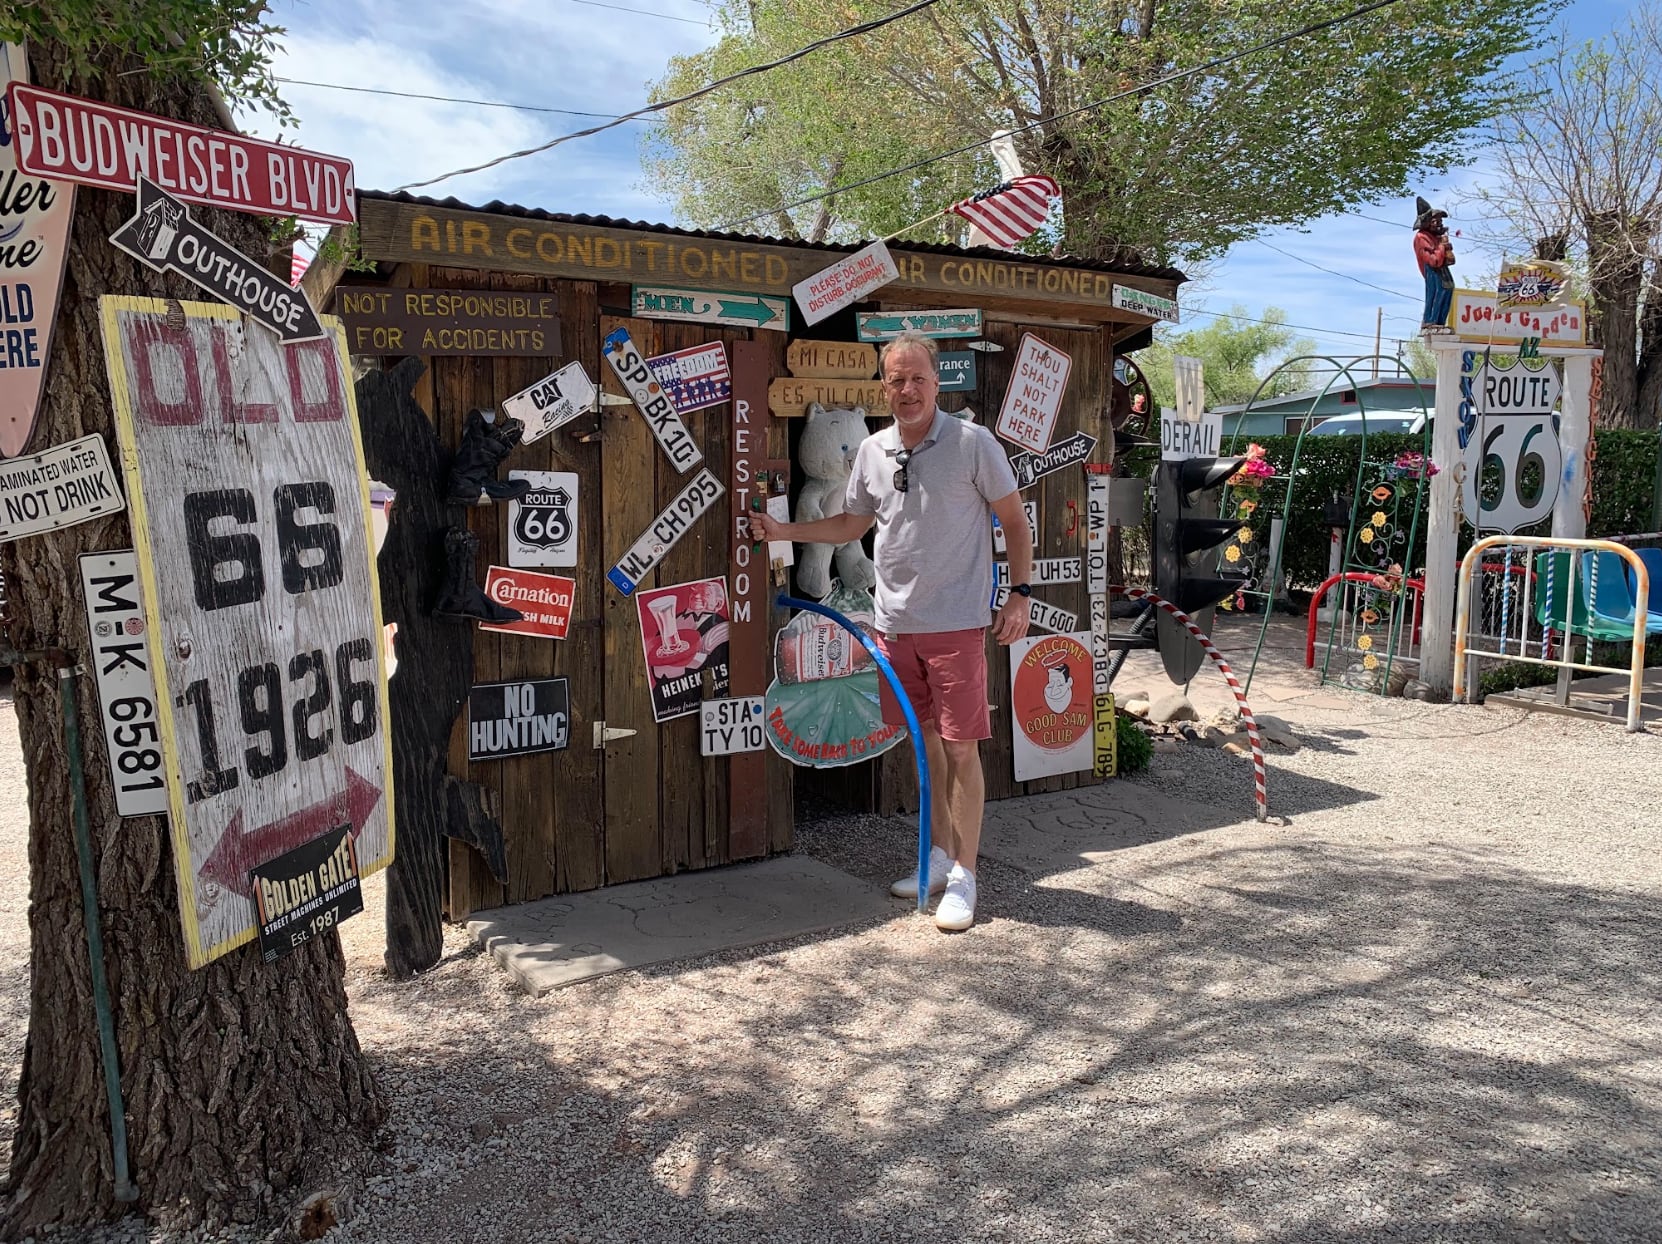 You'll find plenty of nostalgic Route 66 memorabilia and signage in Seligman, AZ